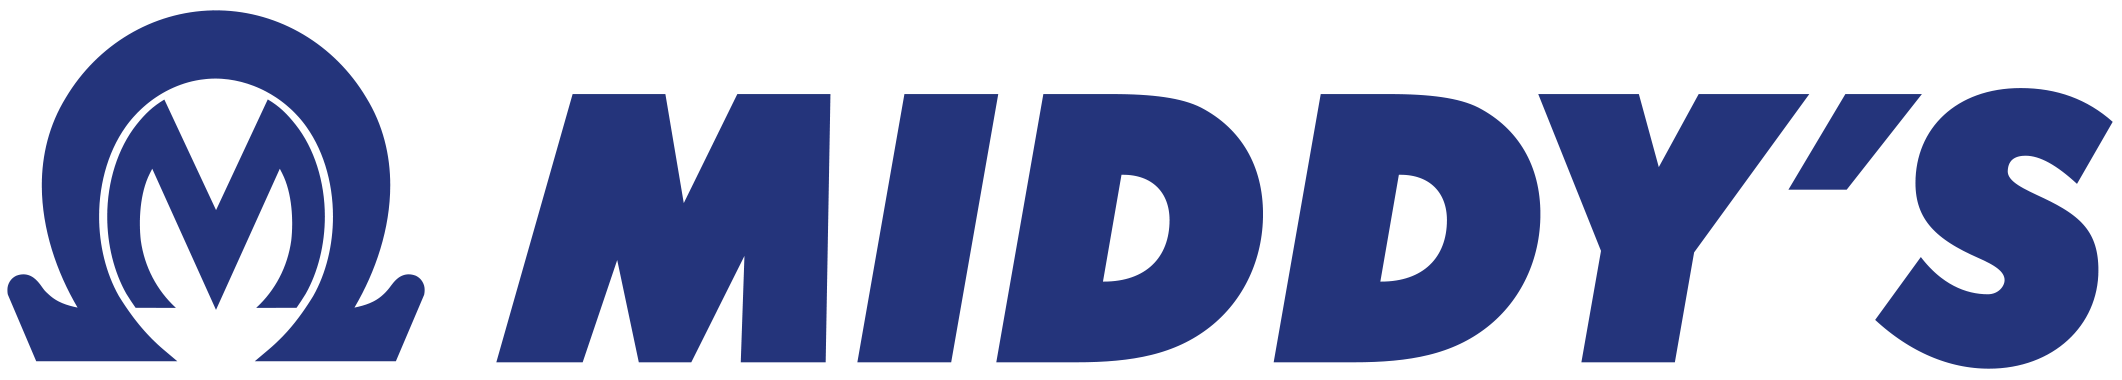 Middys logo